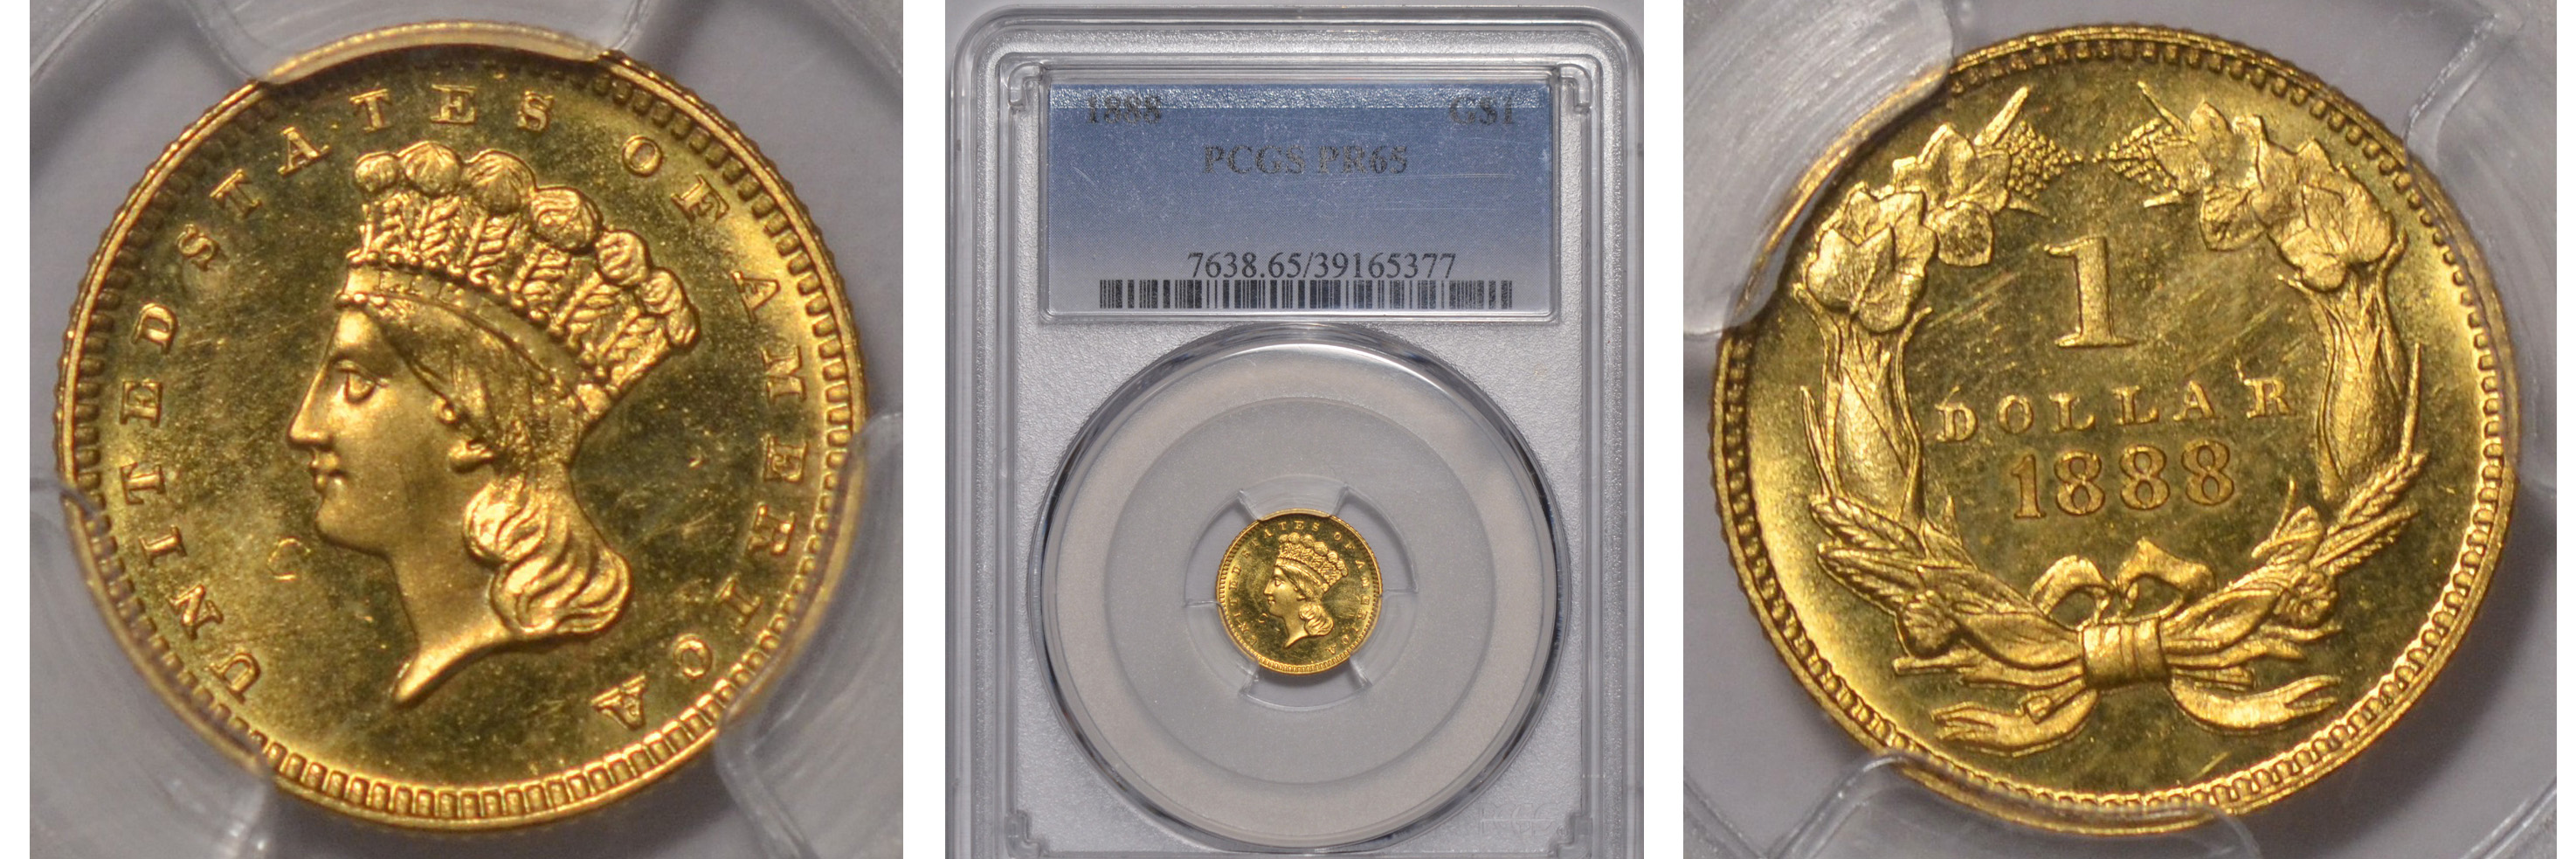 1888 Gold Dollar $1 PCGS PF65